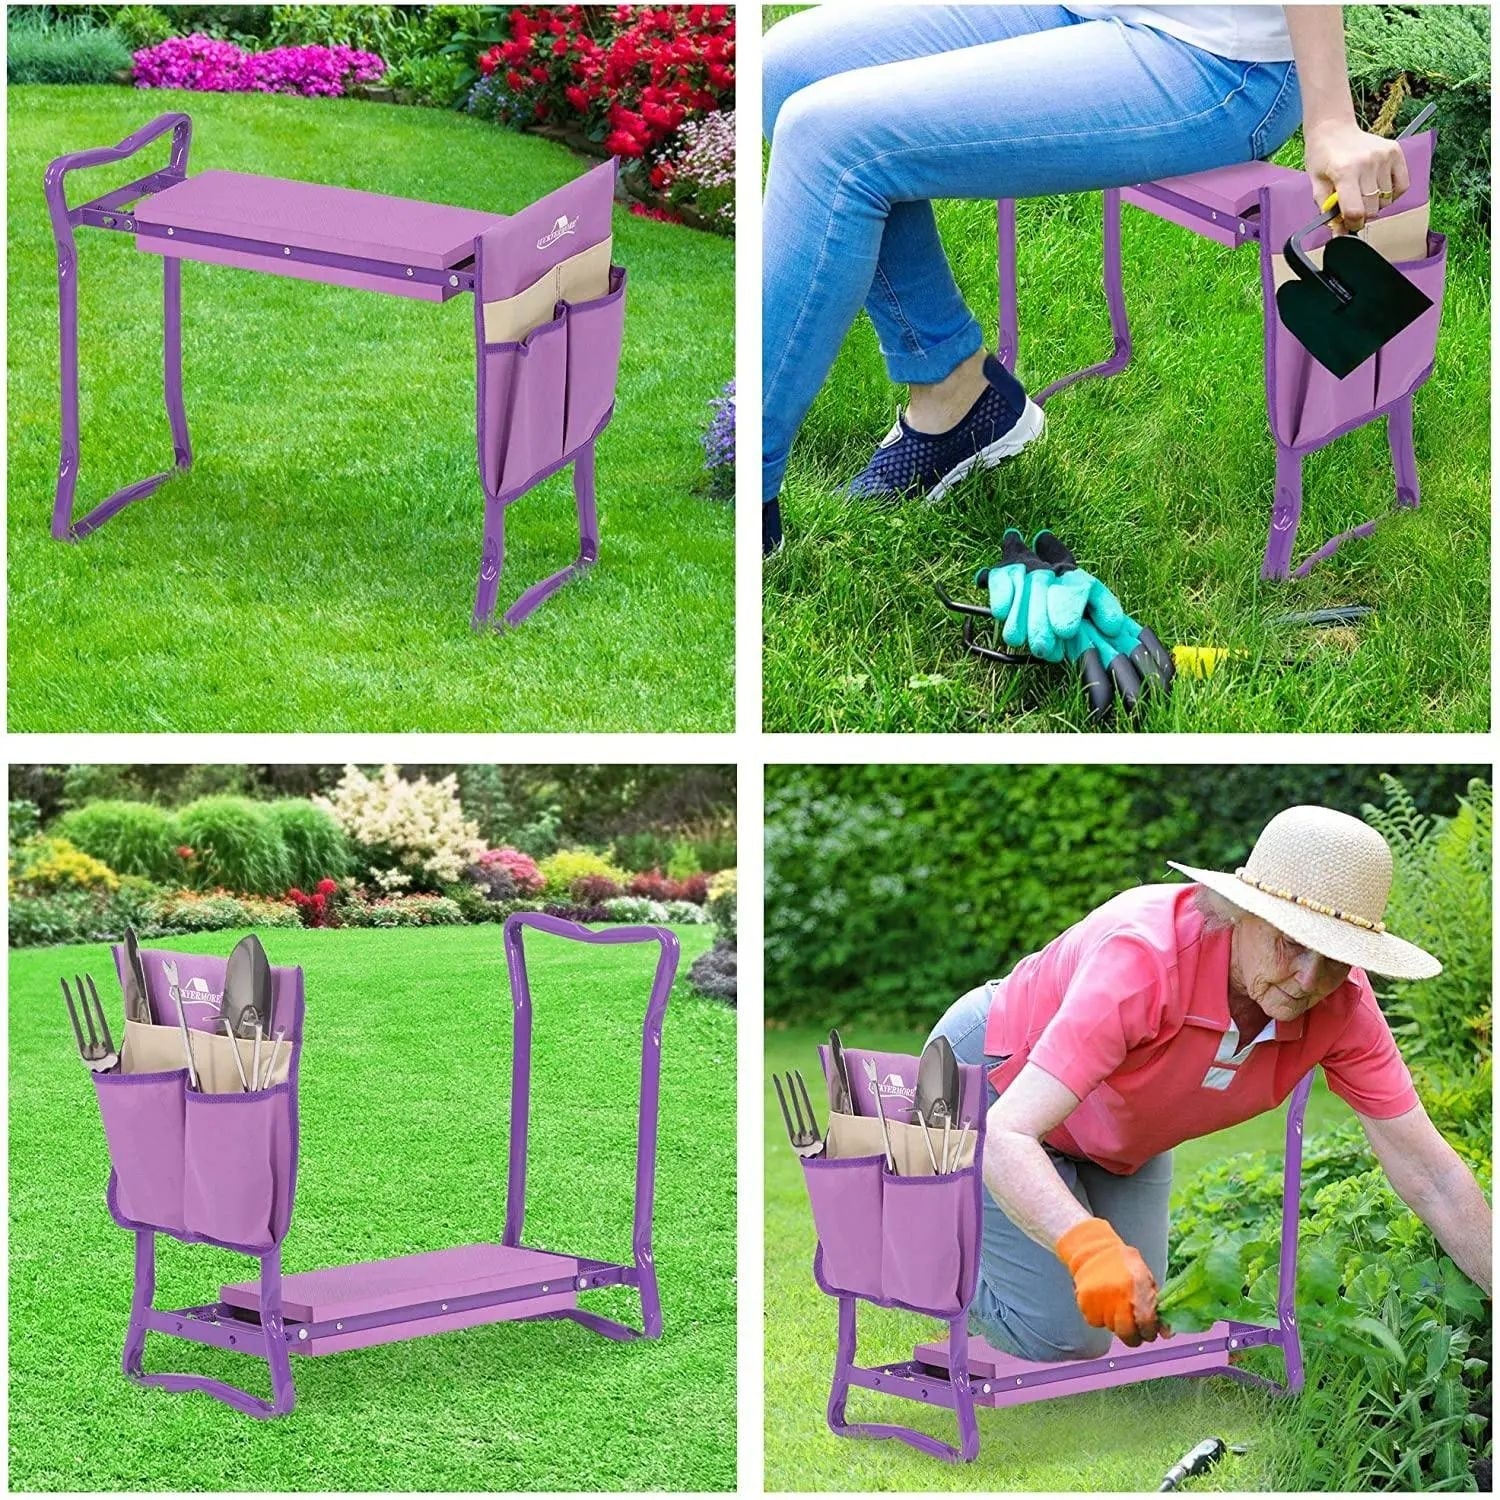 Foldable Garden Kneeler Seat w/ Kneeling Soft Cushion Pad Tools Pouch Portable Gardener Kneeling Bench Stool 